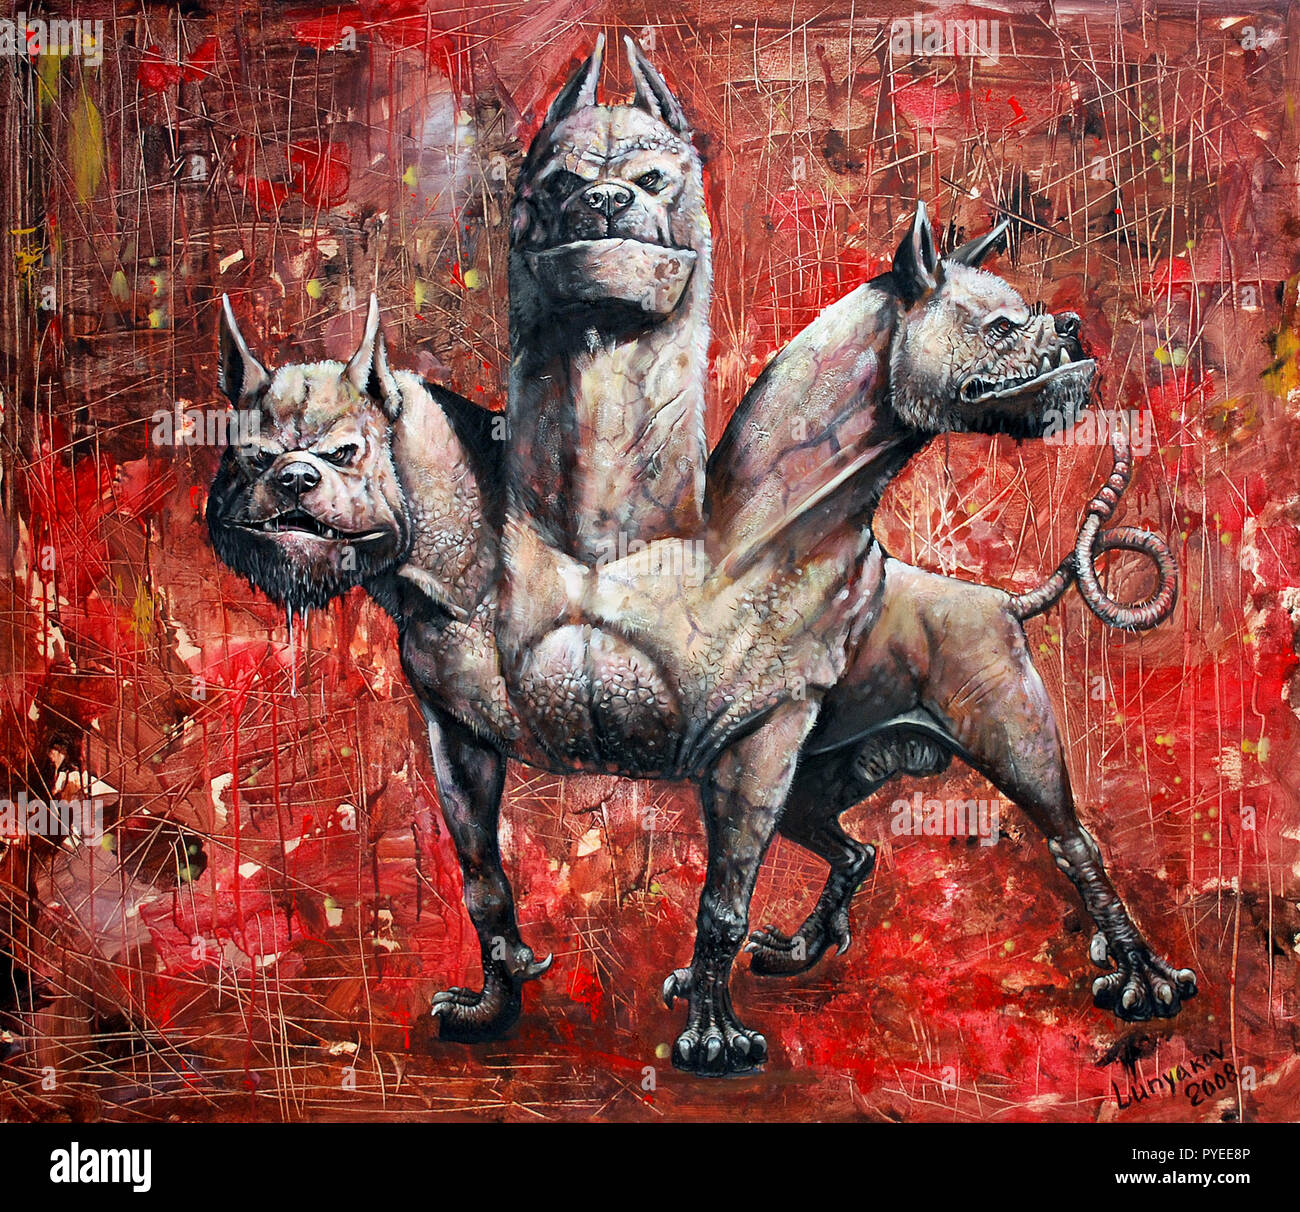 Cerberus - hound of Hades. Terrible three-headed dog from Greek mythology. Museum painting. Stock Photo